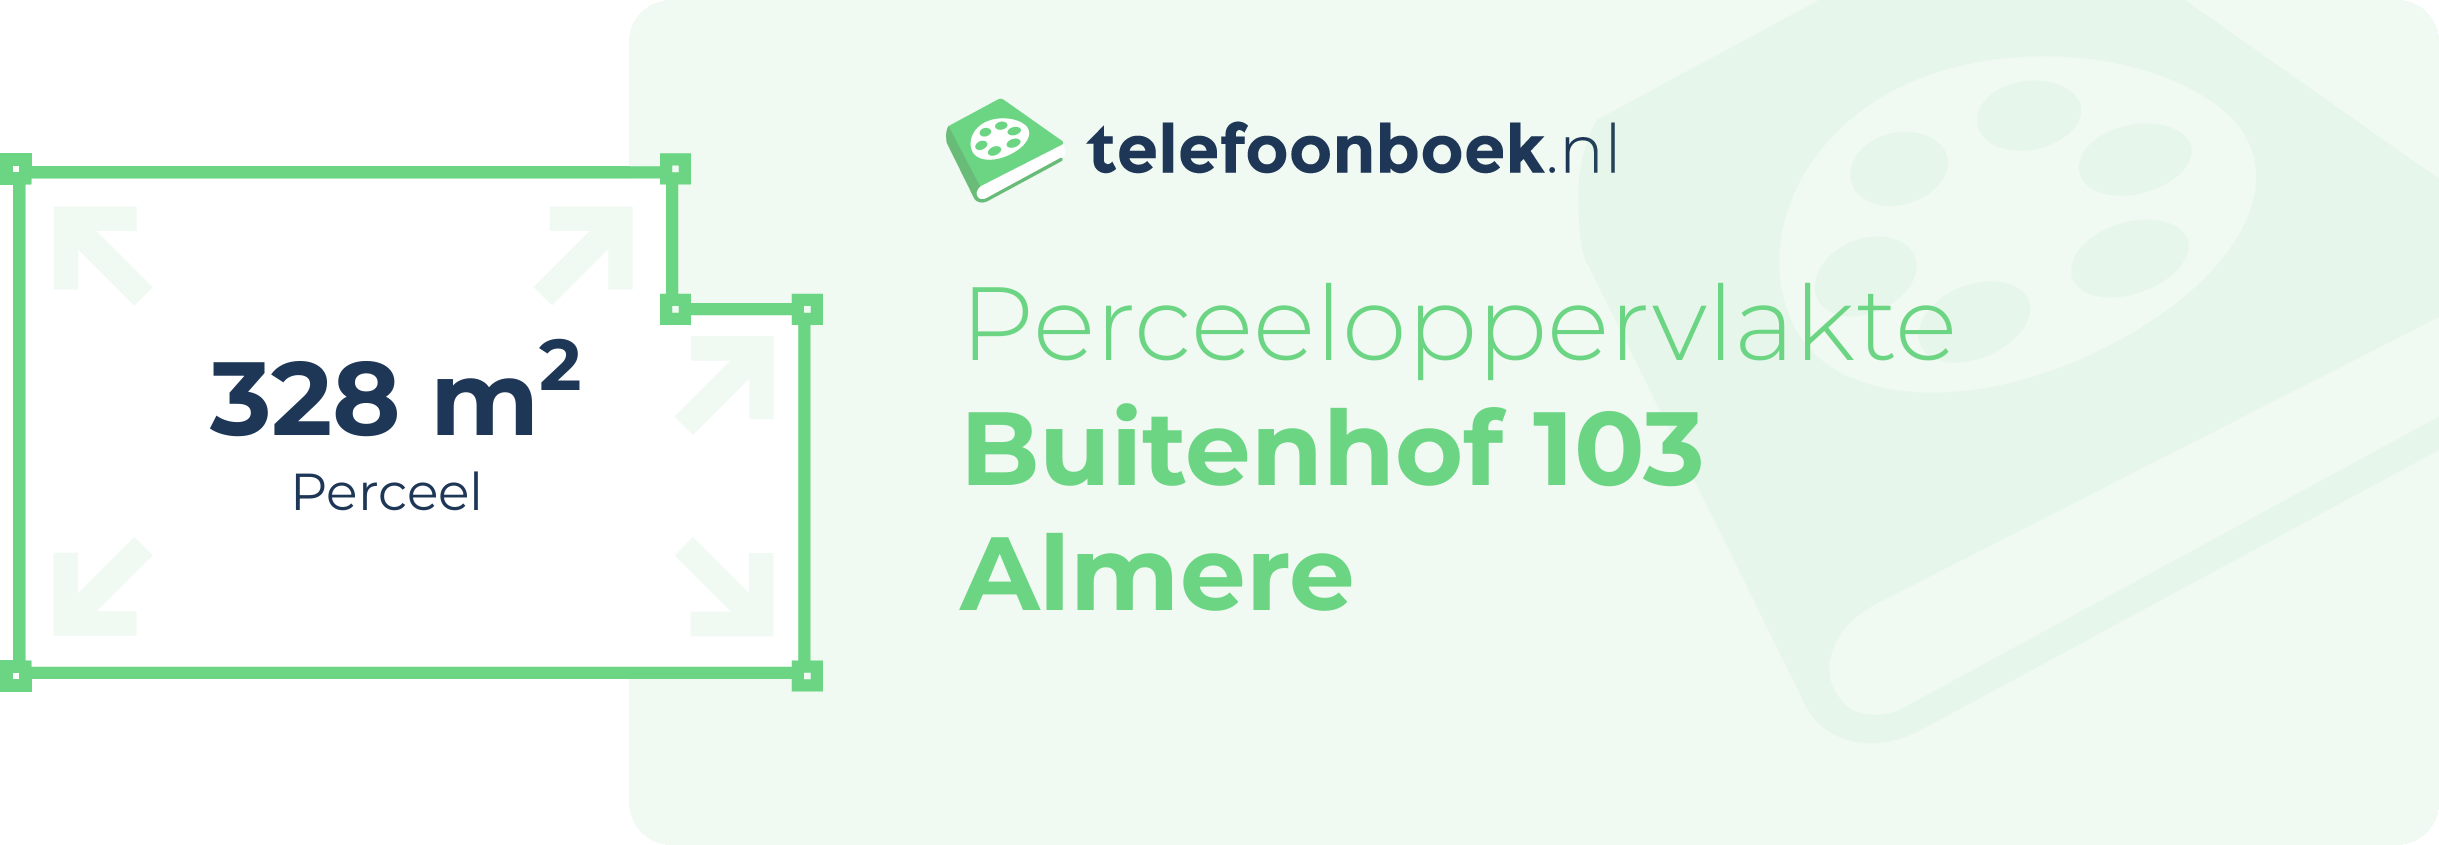 Perceeloppervlakte Buitenhof 103 Almere